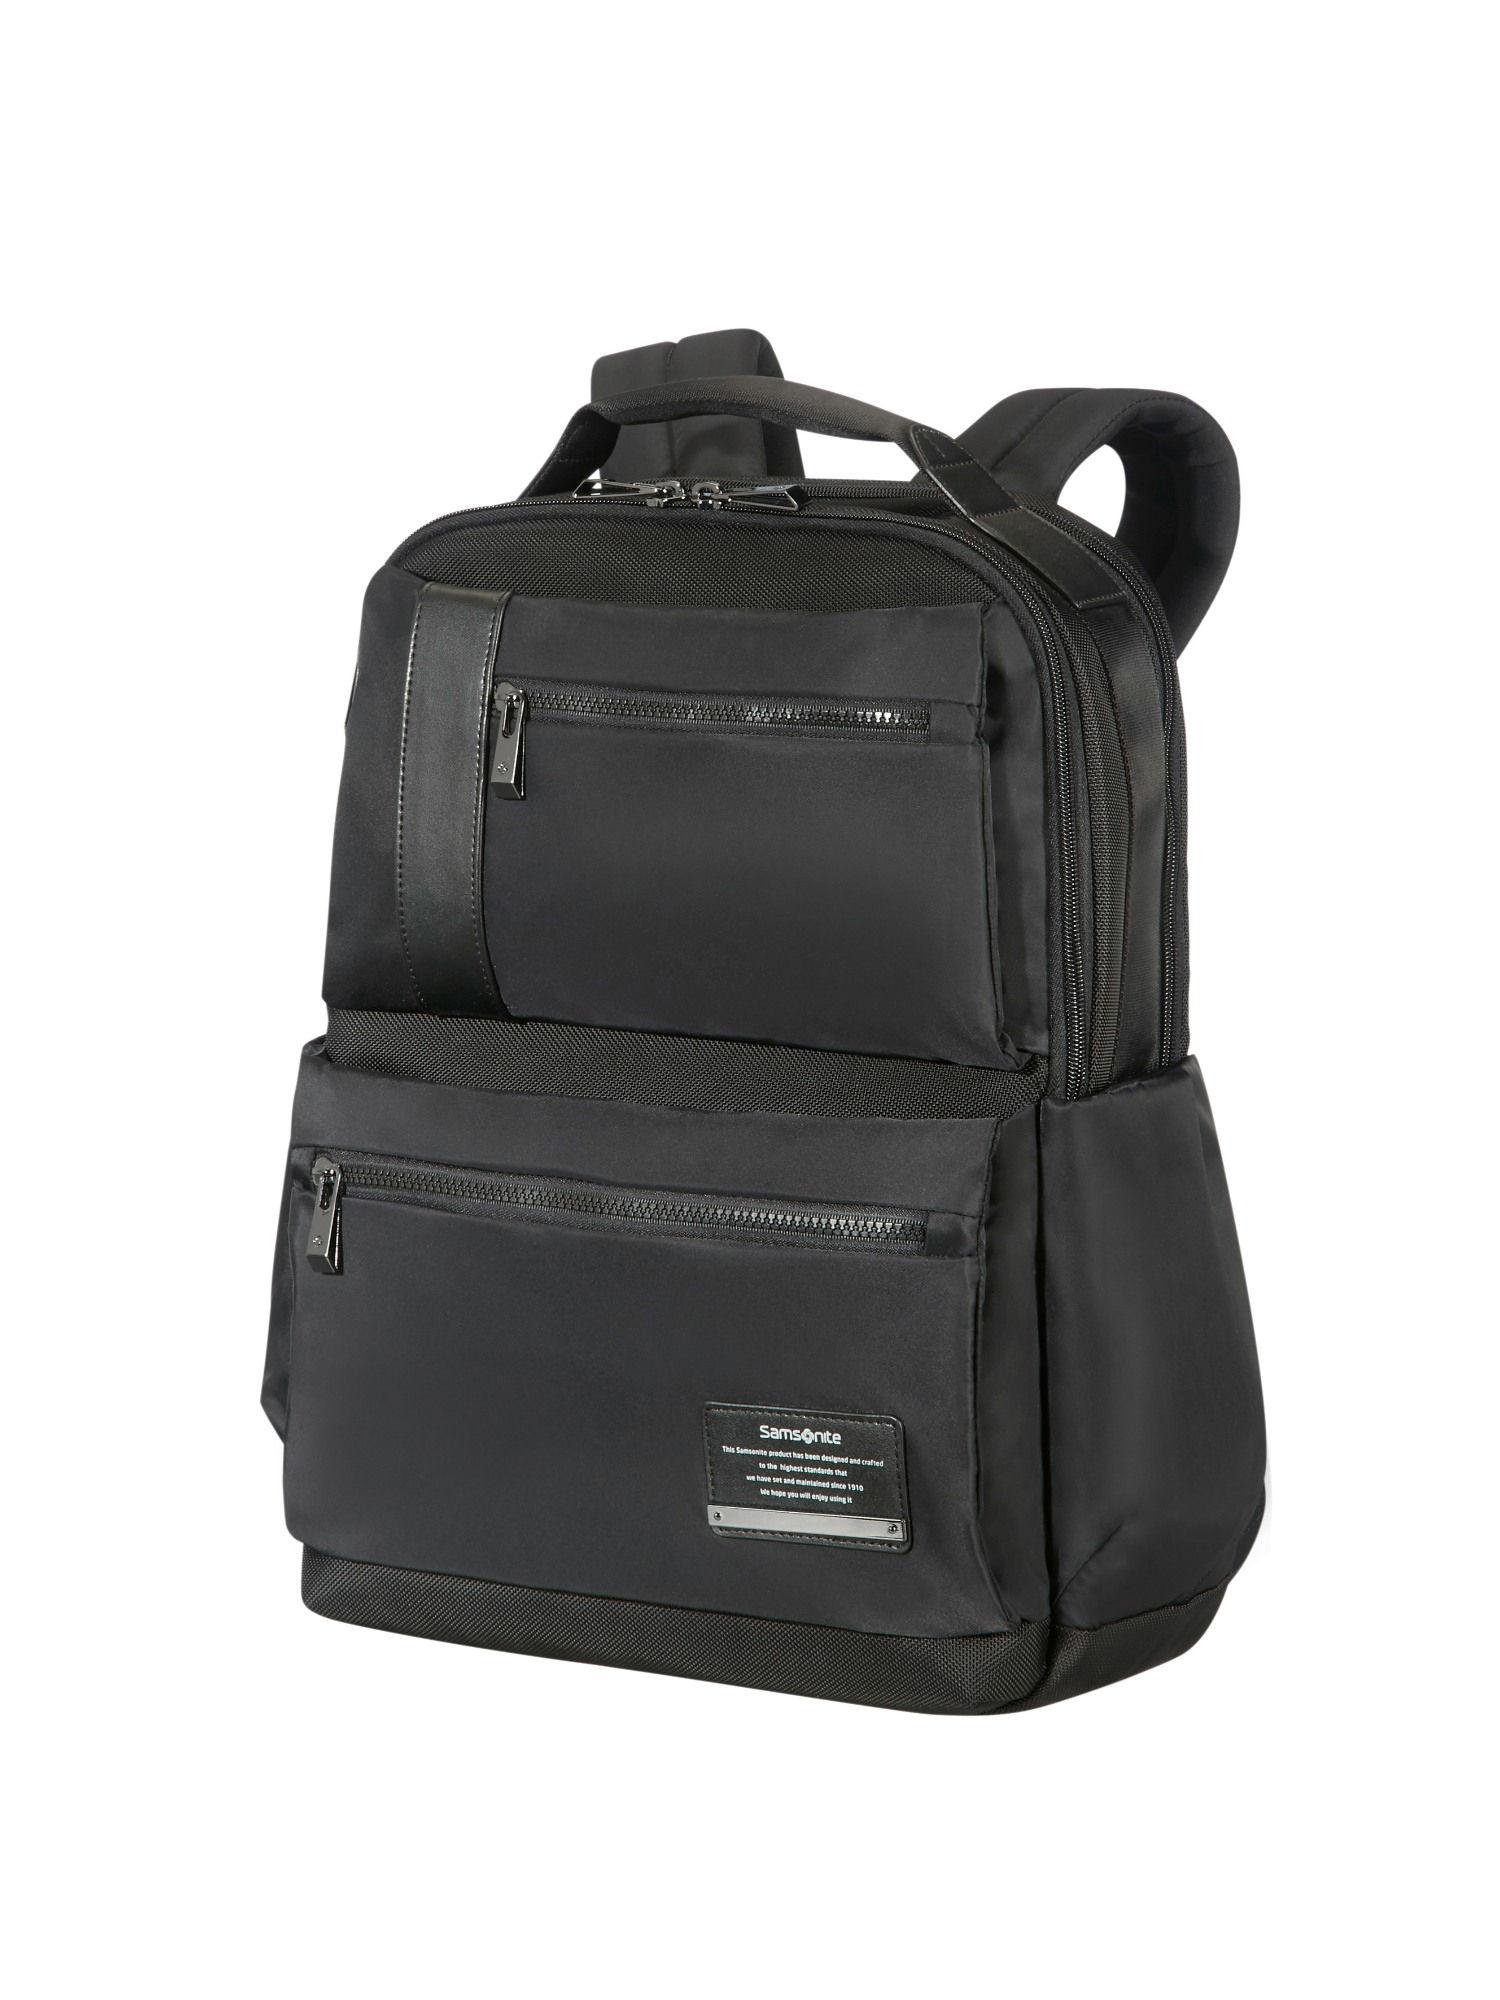 Openroad Laptop Backpack -In-Jet Black